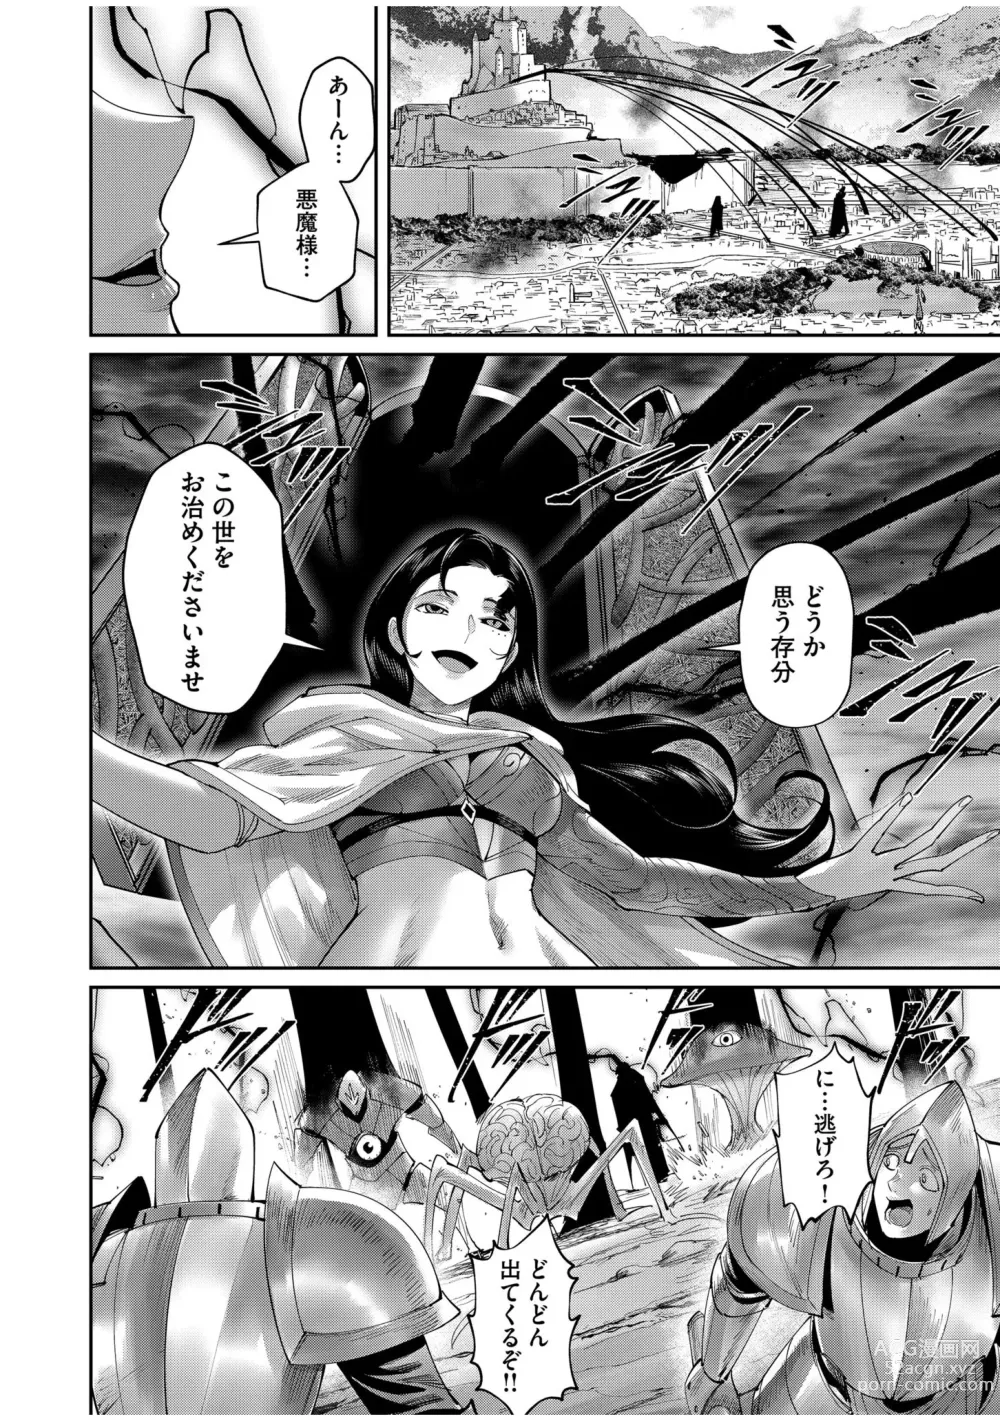 Page 162 of manga Kichiku Eiyuu Vol.07